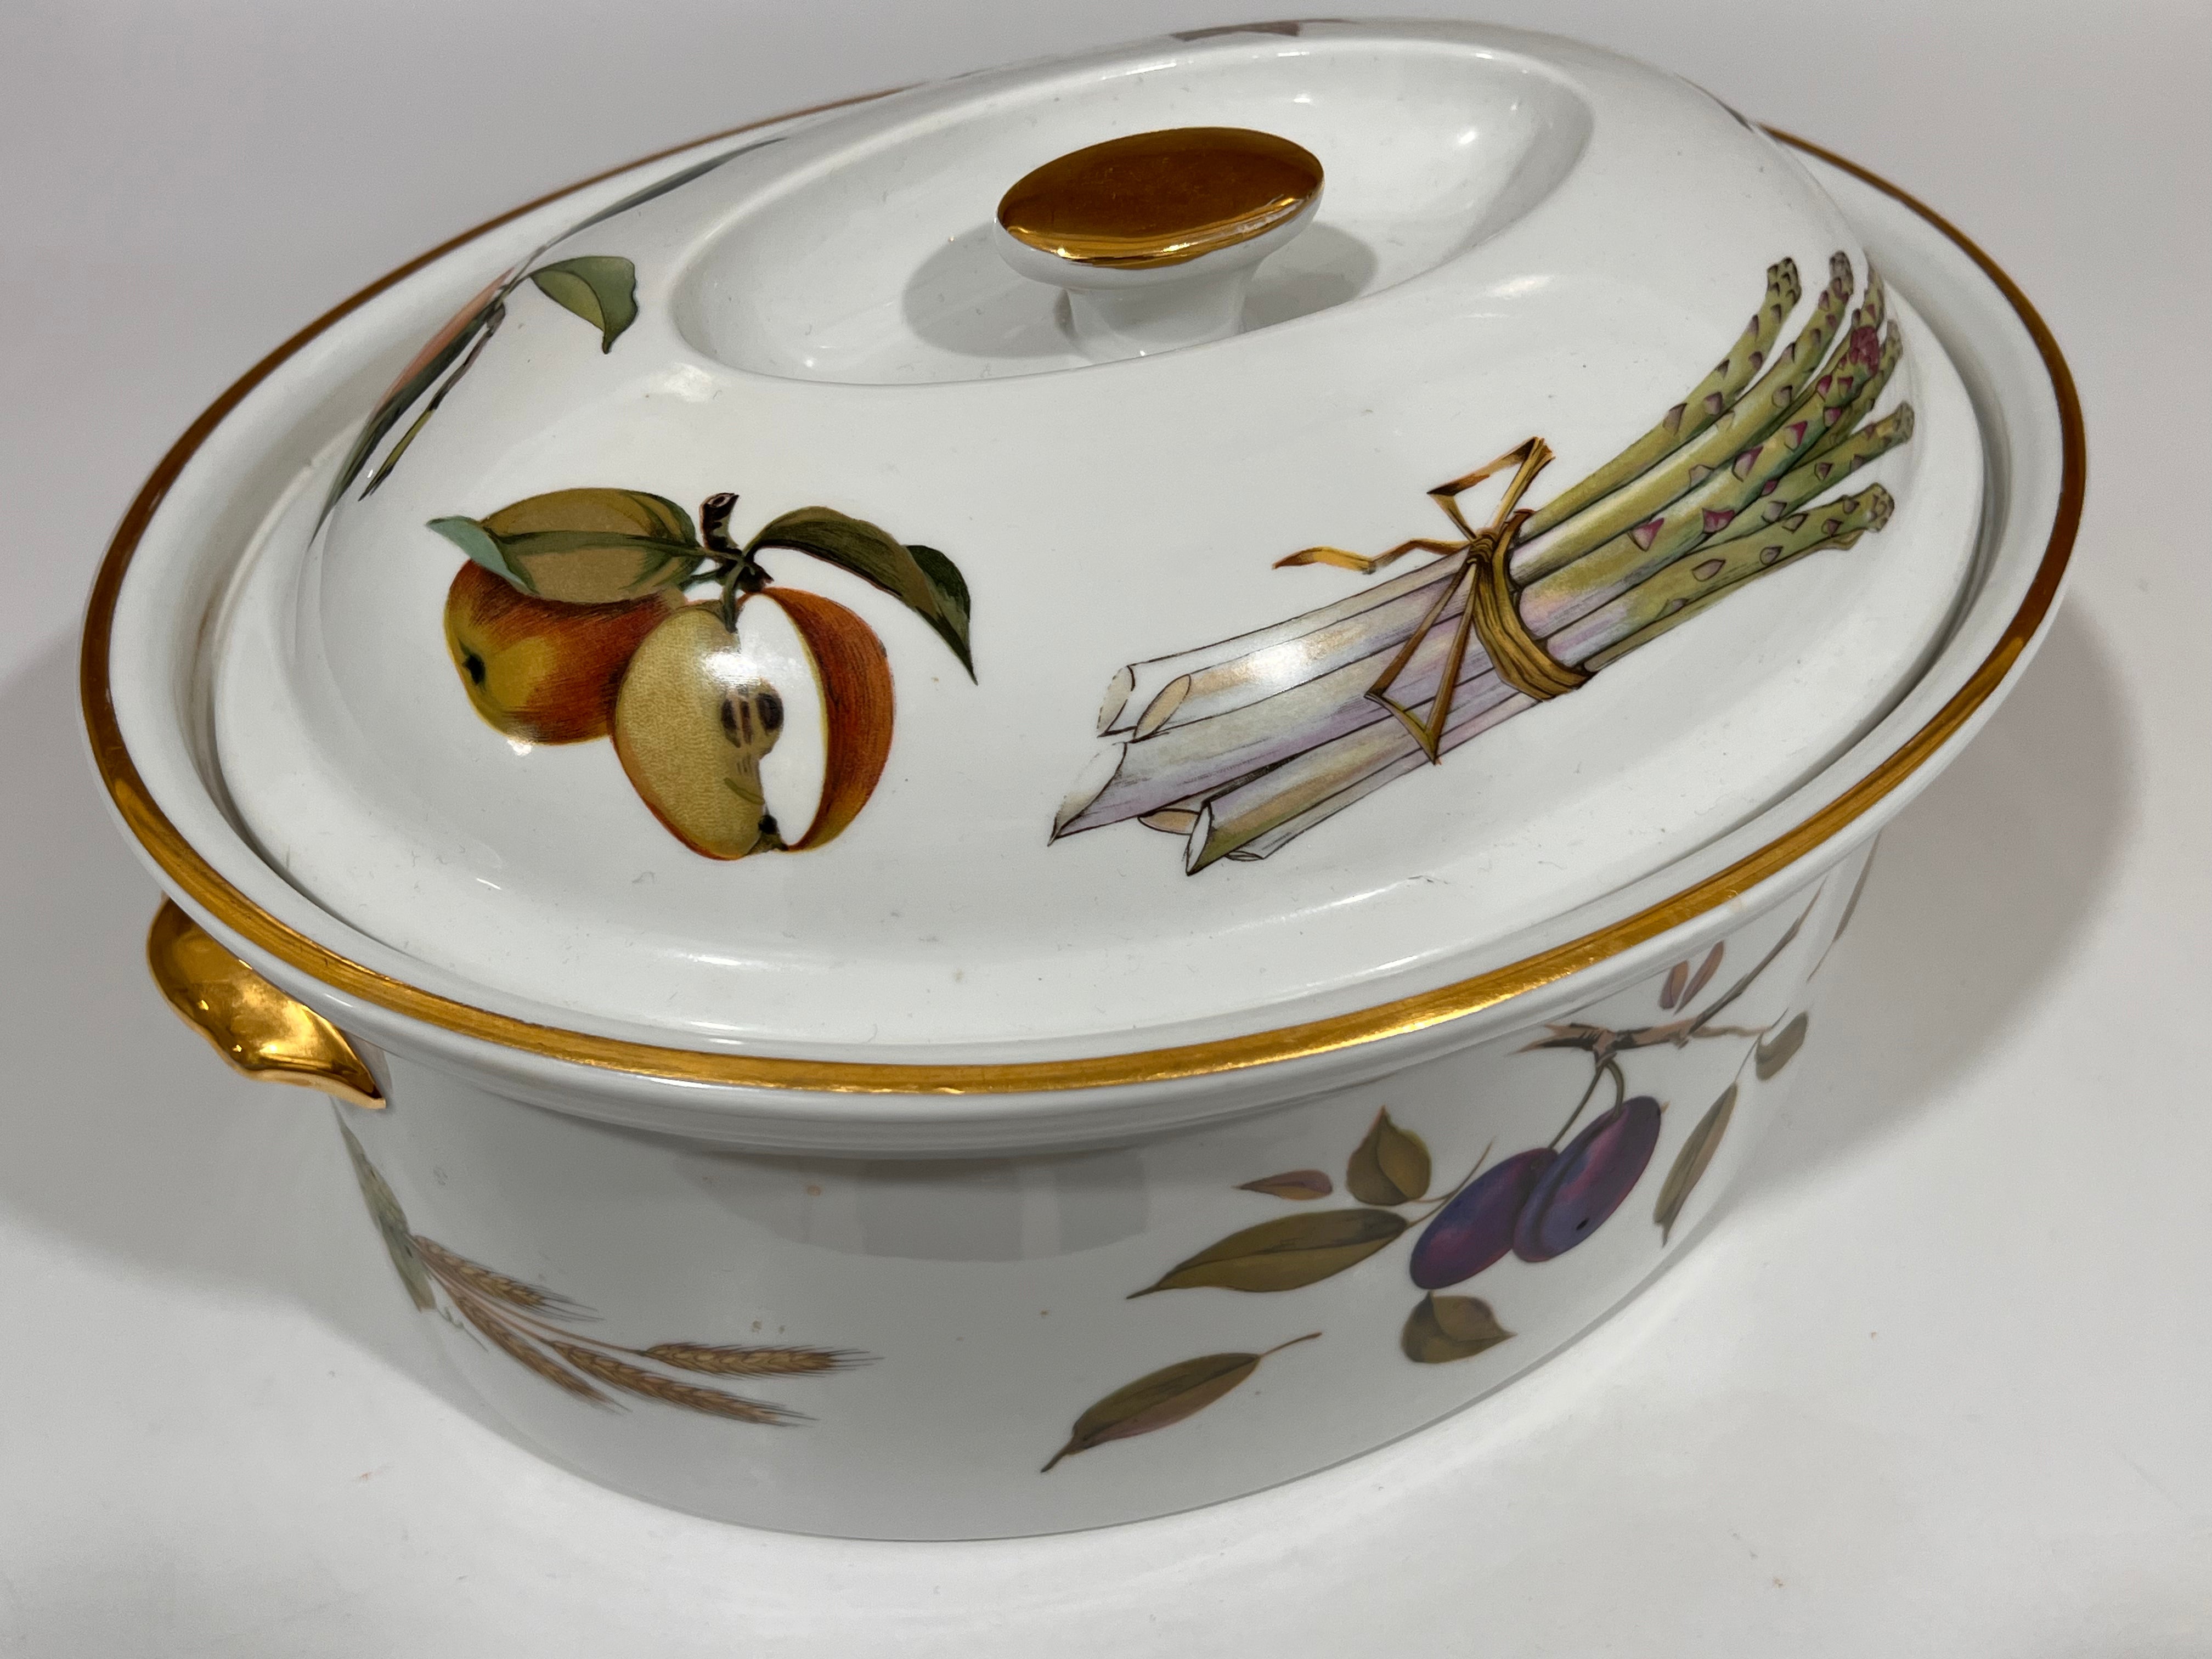 Royal Worcester Evesham Original Porcelain Fine China - Big Serving Dish With Lid - Gold Trim - From England